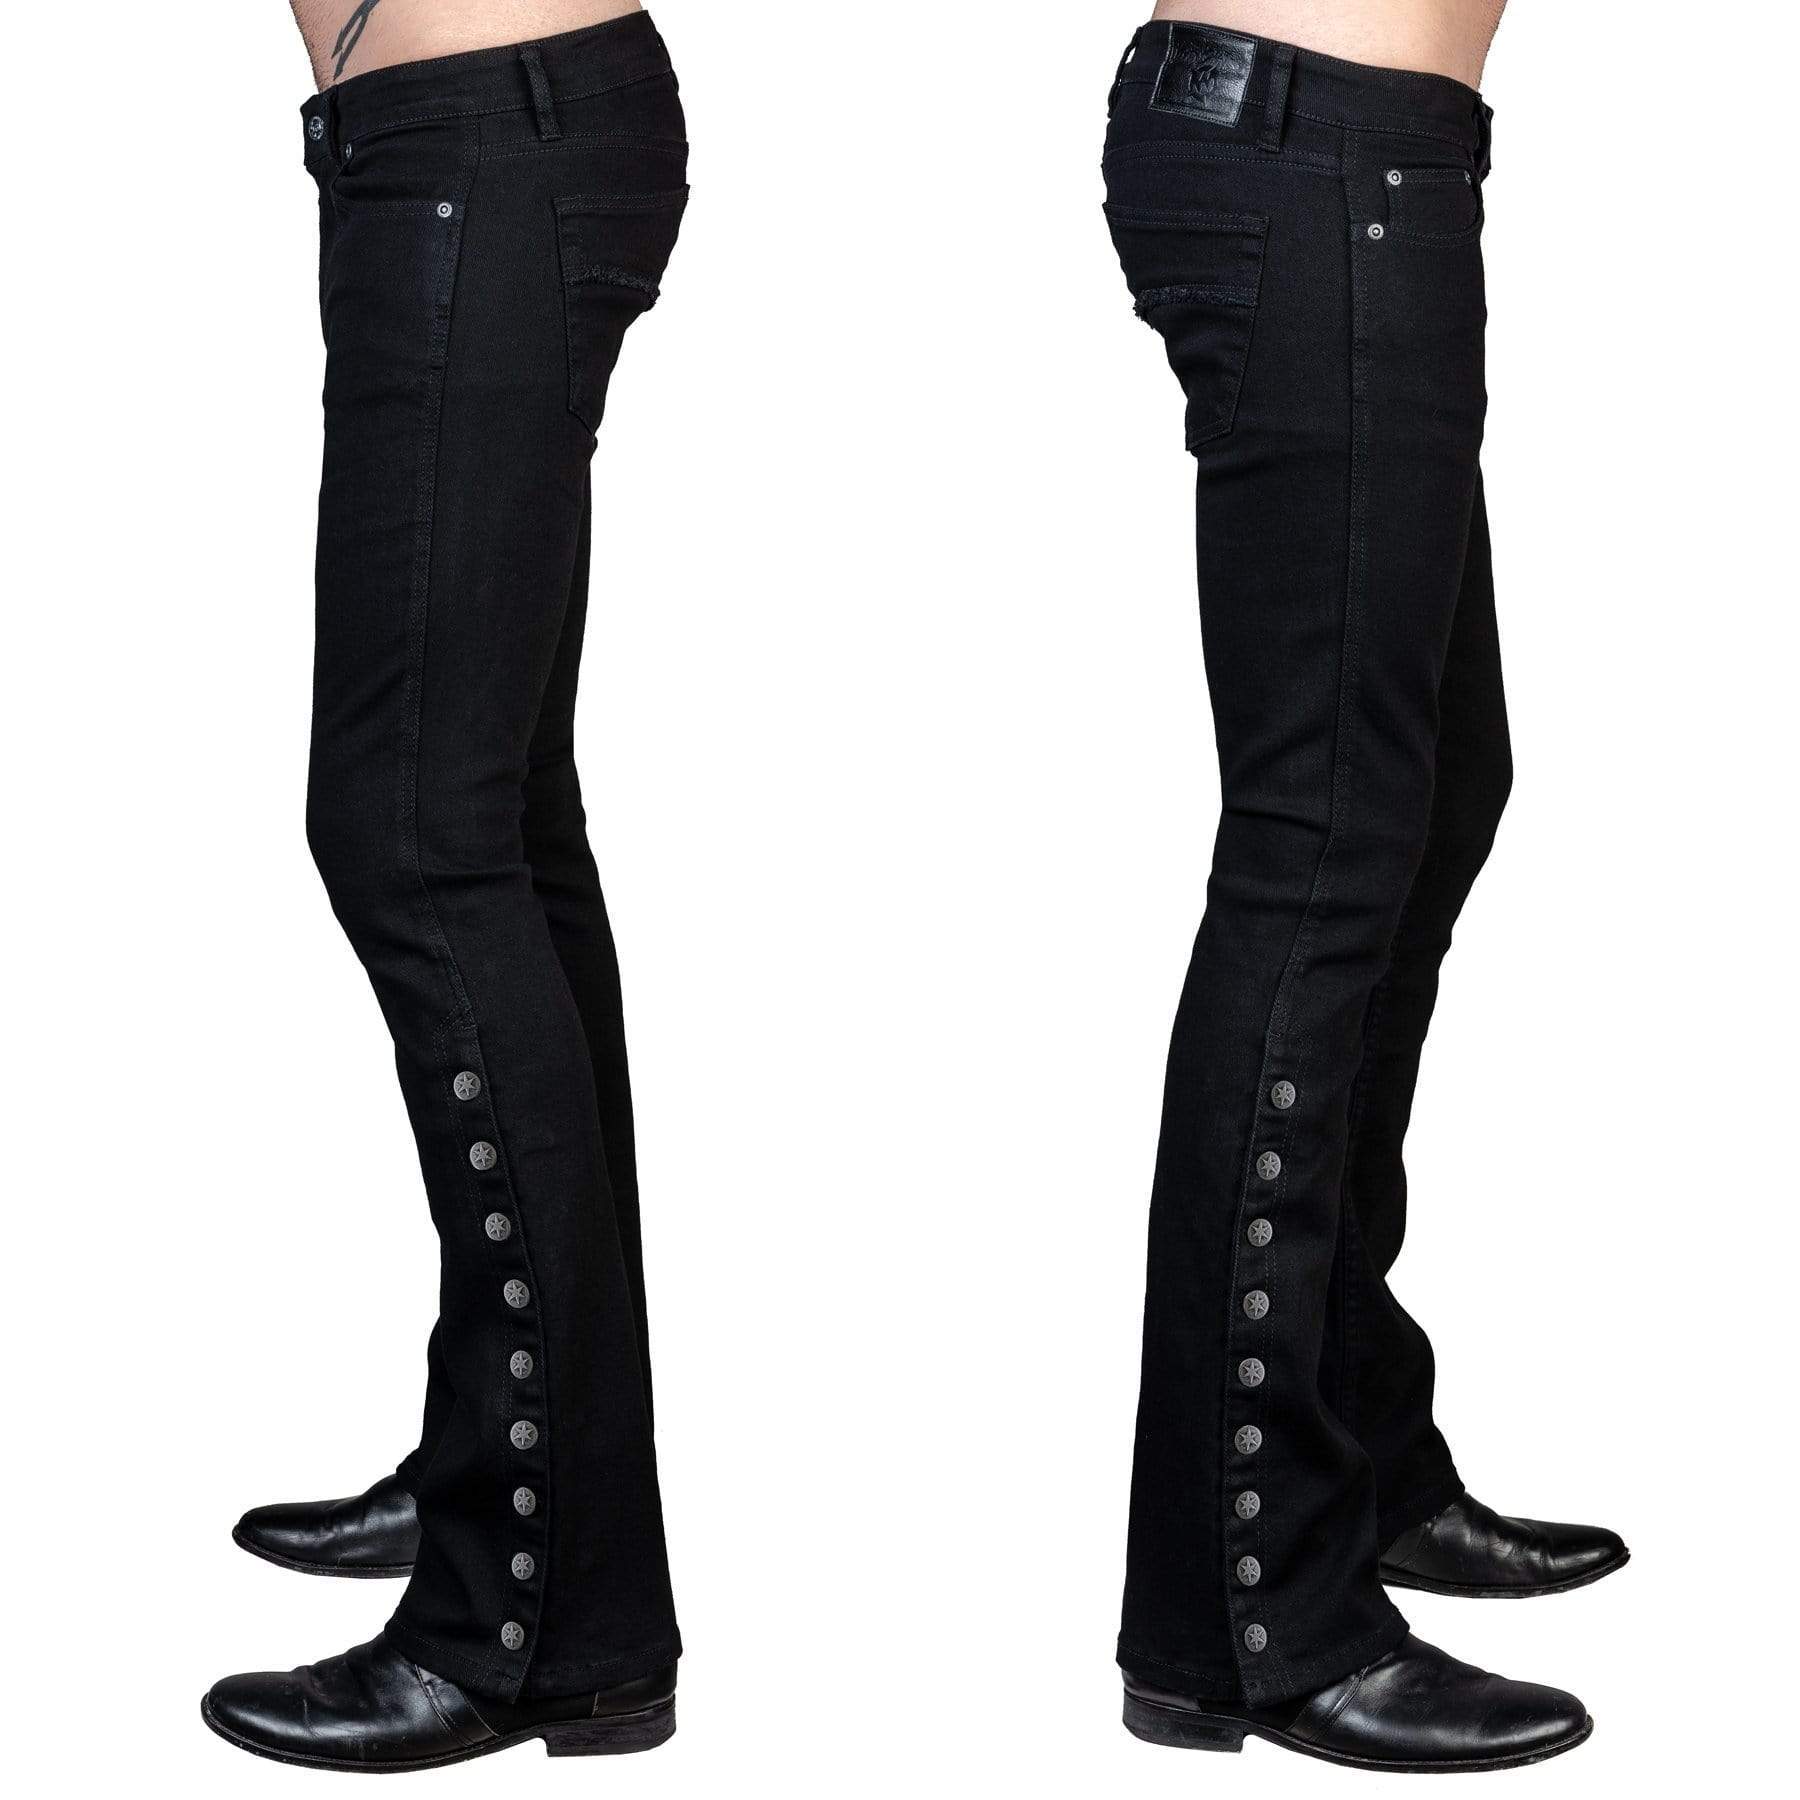 Wornstar Clothing Hellraiser Side Laced Mens Jeans - Black